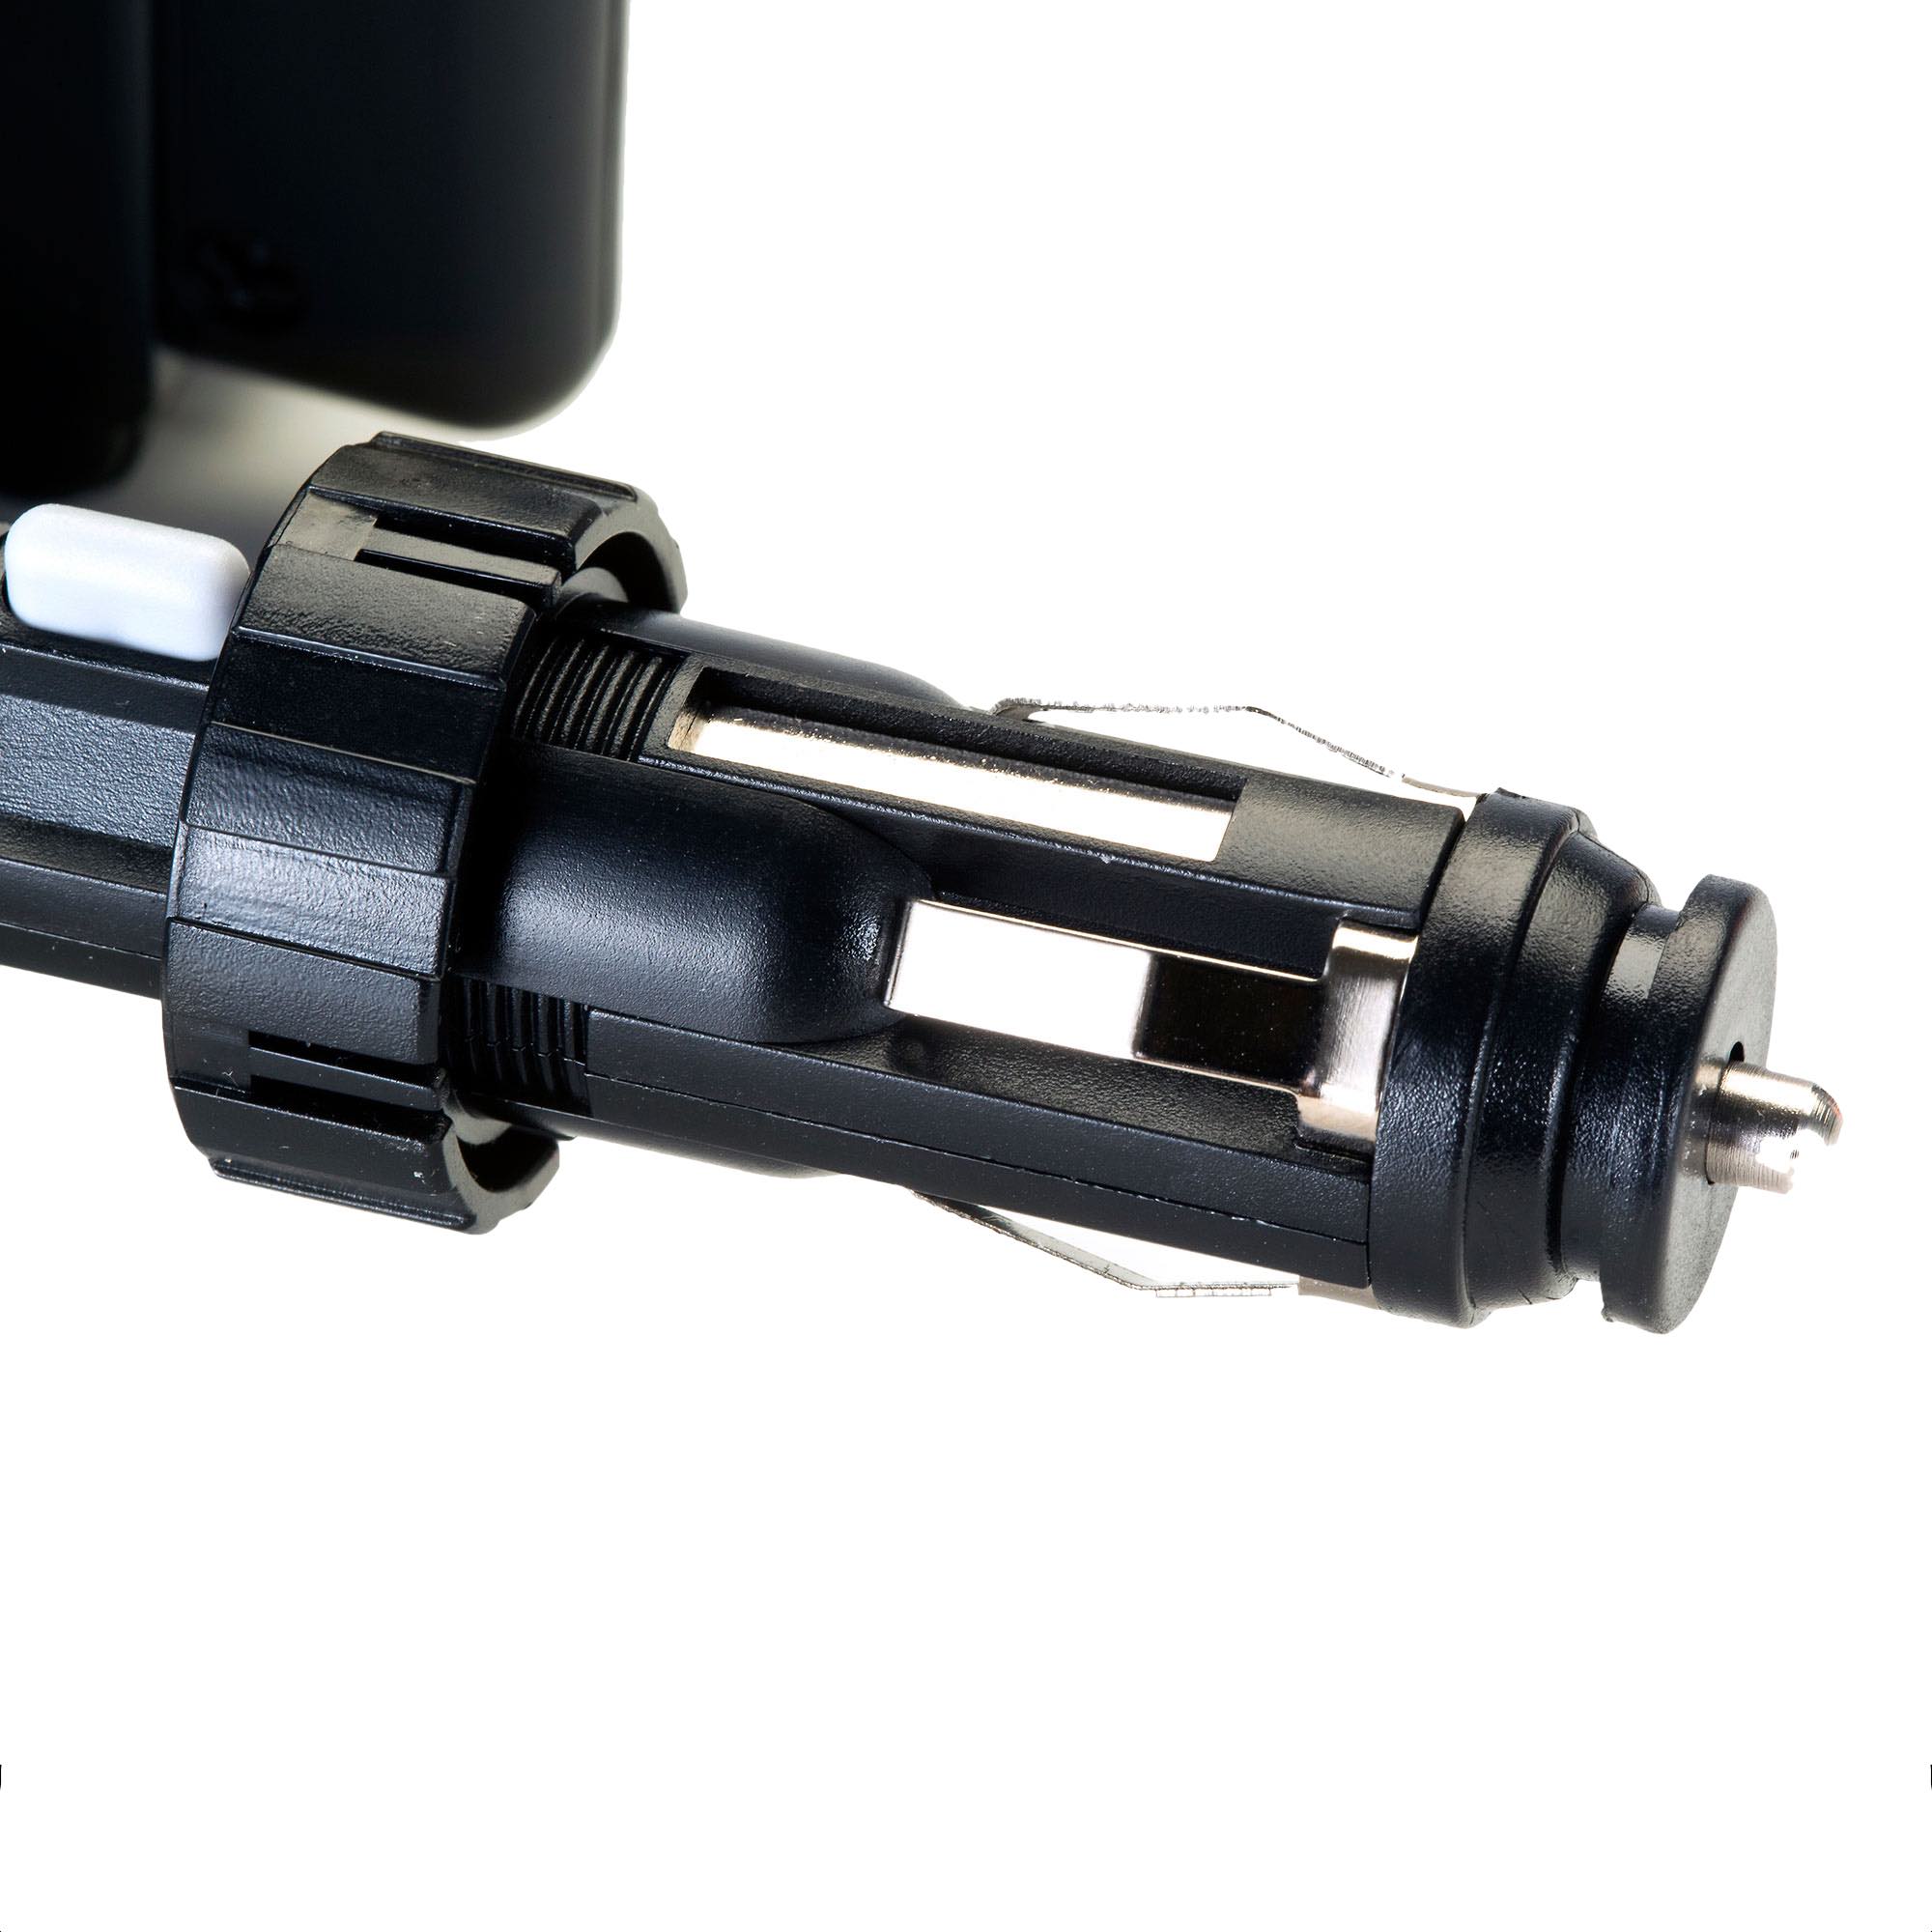 Dual USB / 12V Charger Car Cigarette Lighter Mount and Holder for the Garmin Nuvi 30